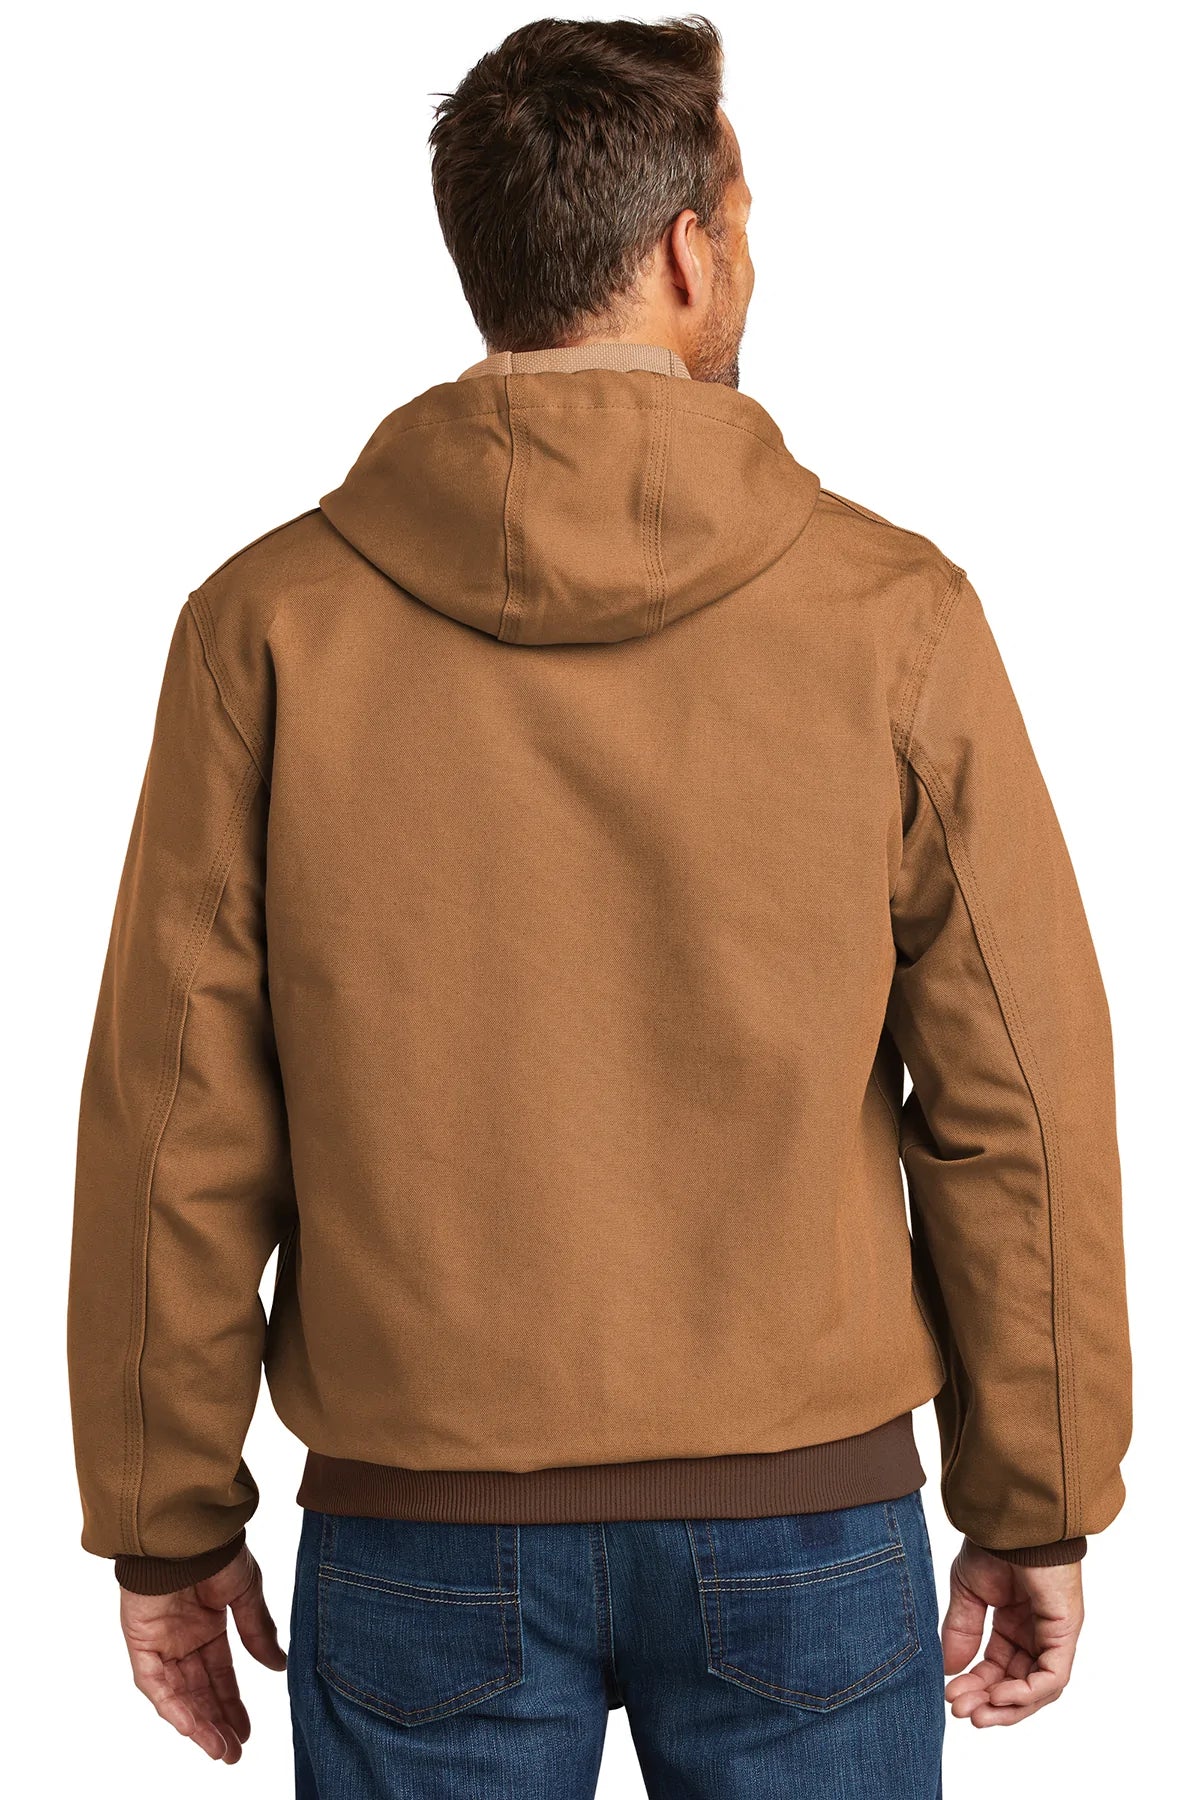 carhartt_cttj131 _carhartt brown_company_logo_jackets